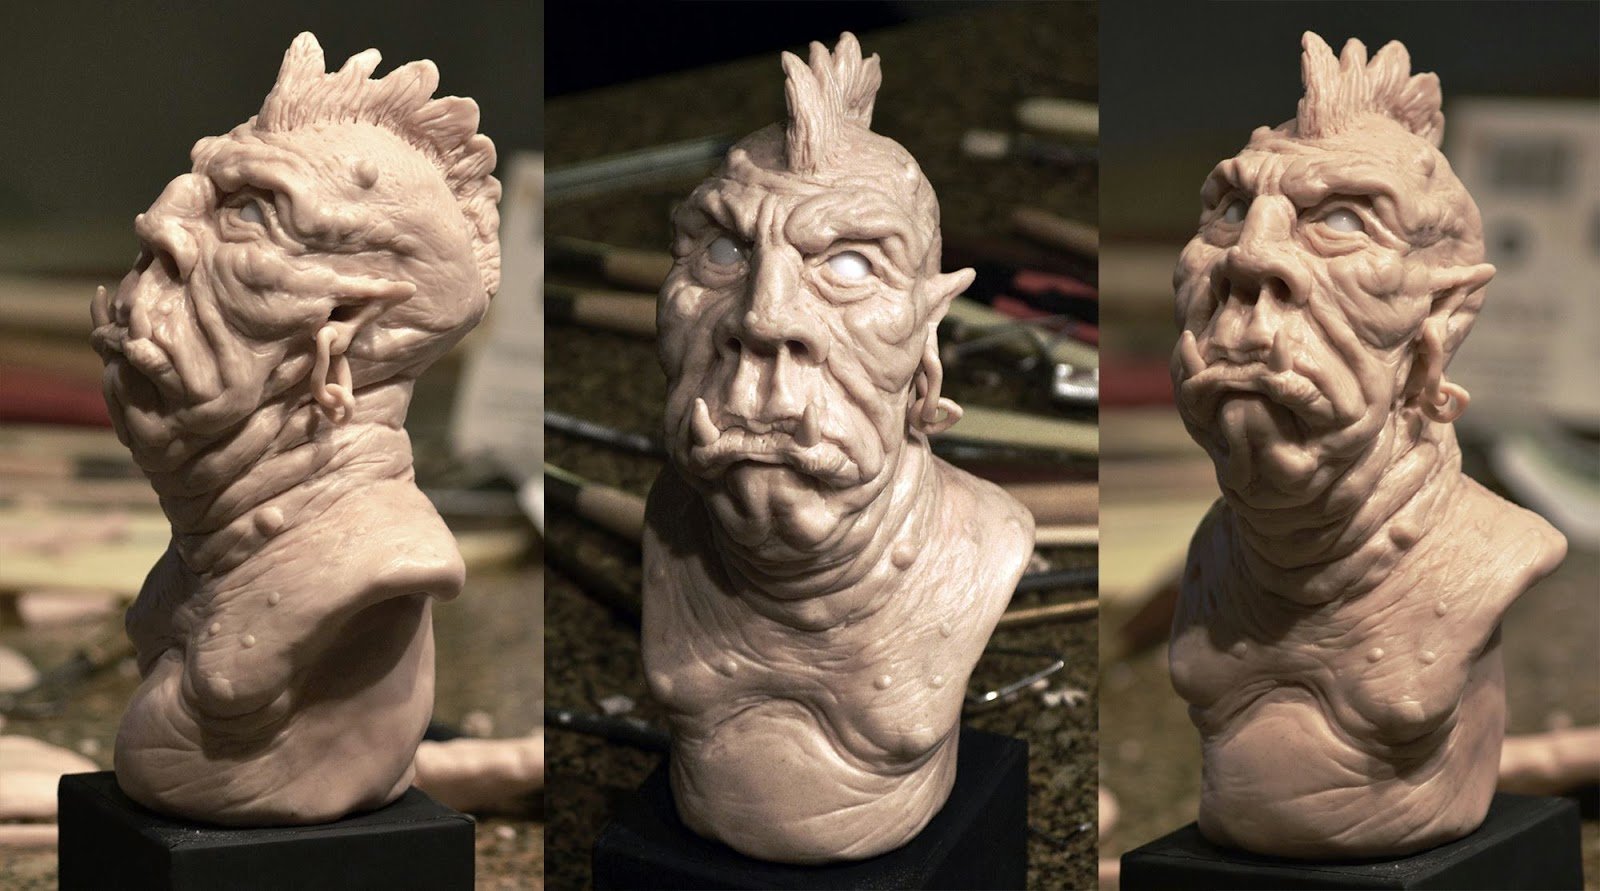 ArtStation - Verschiedene Skulpturen aus Super Sculpey